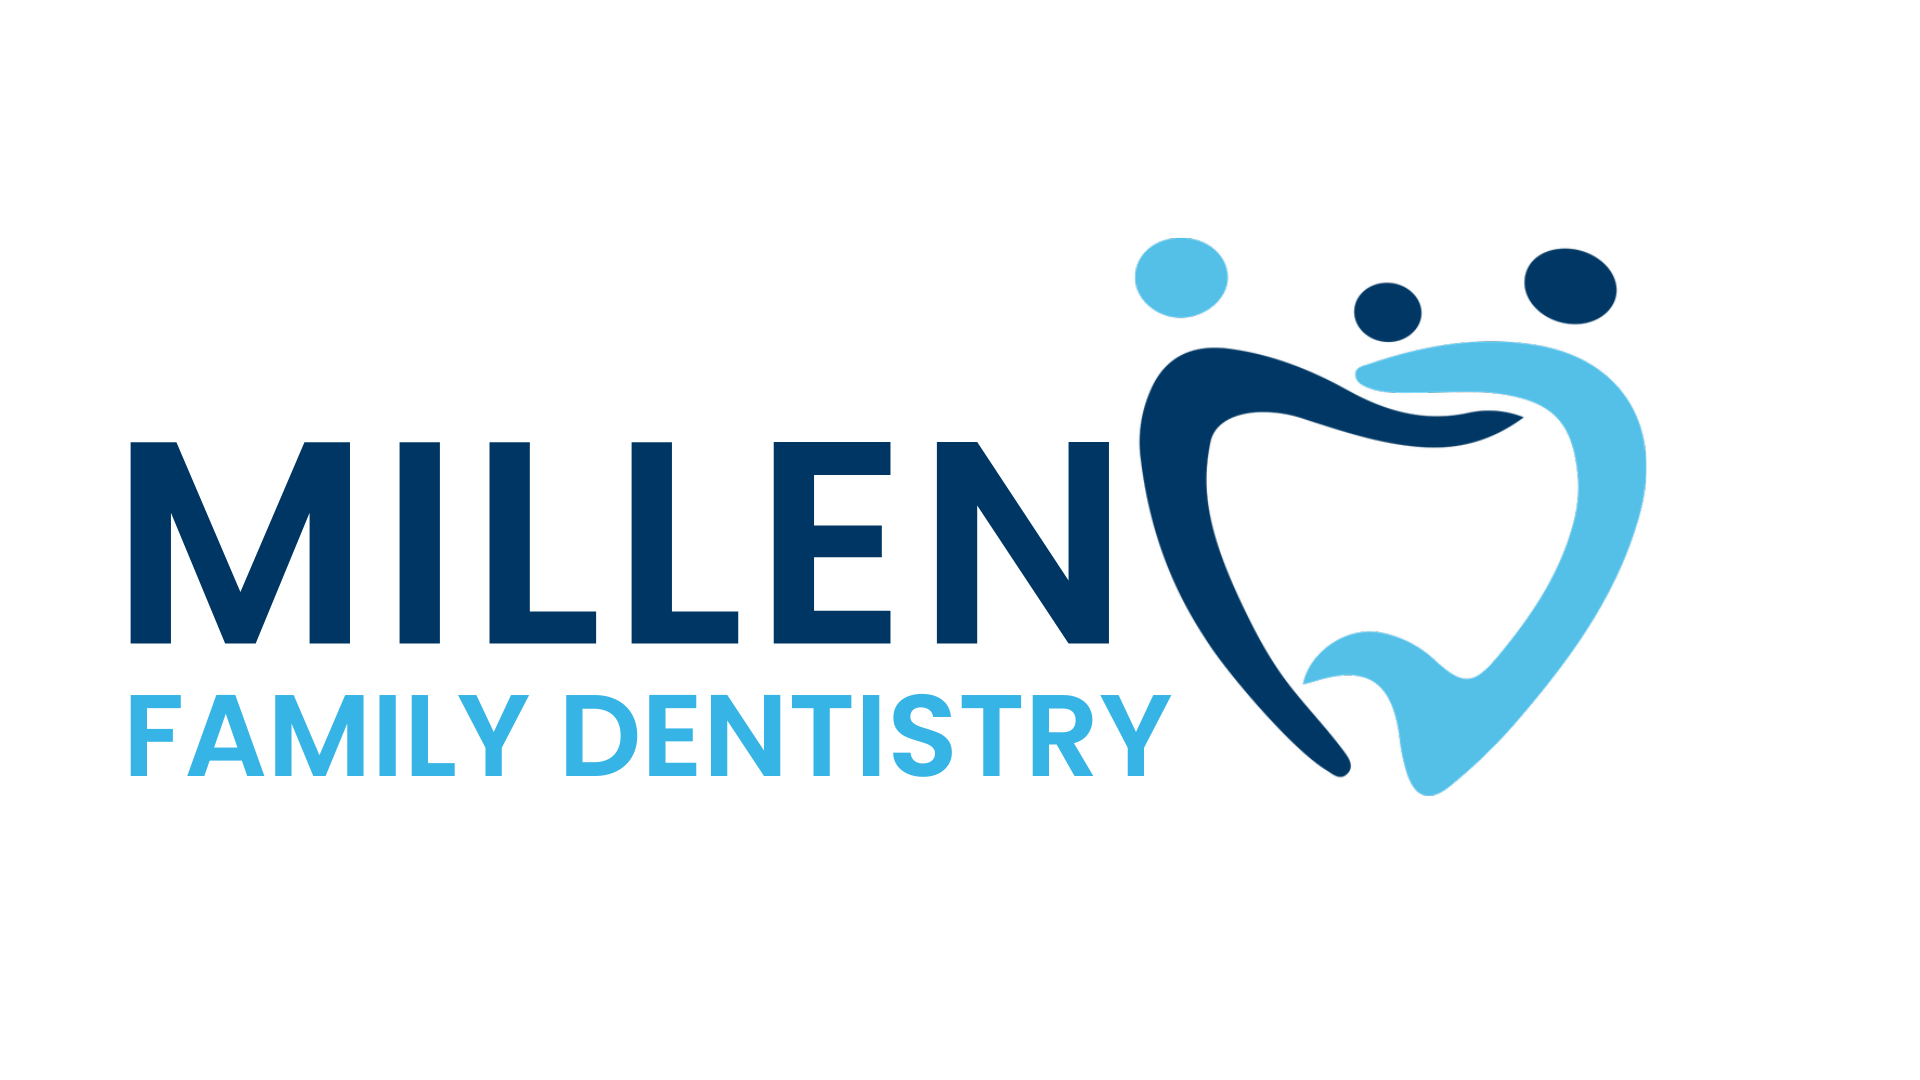 Millen Family Dentistry (1920 × 1080 px)